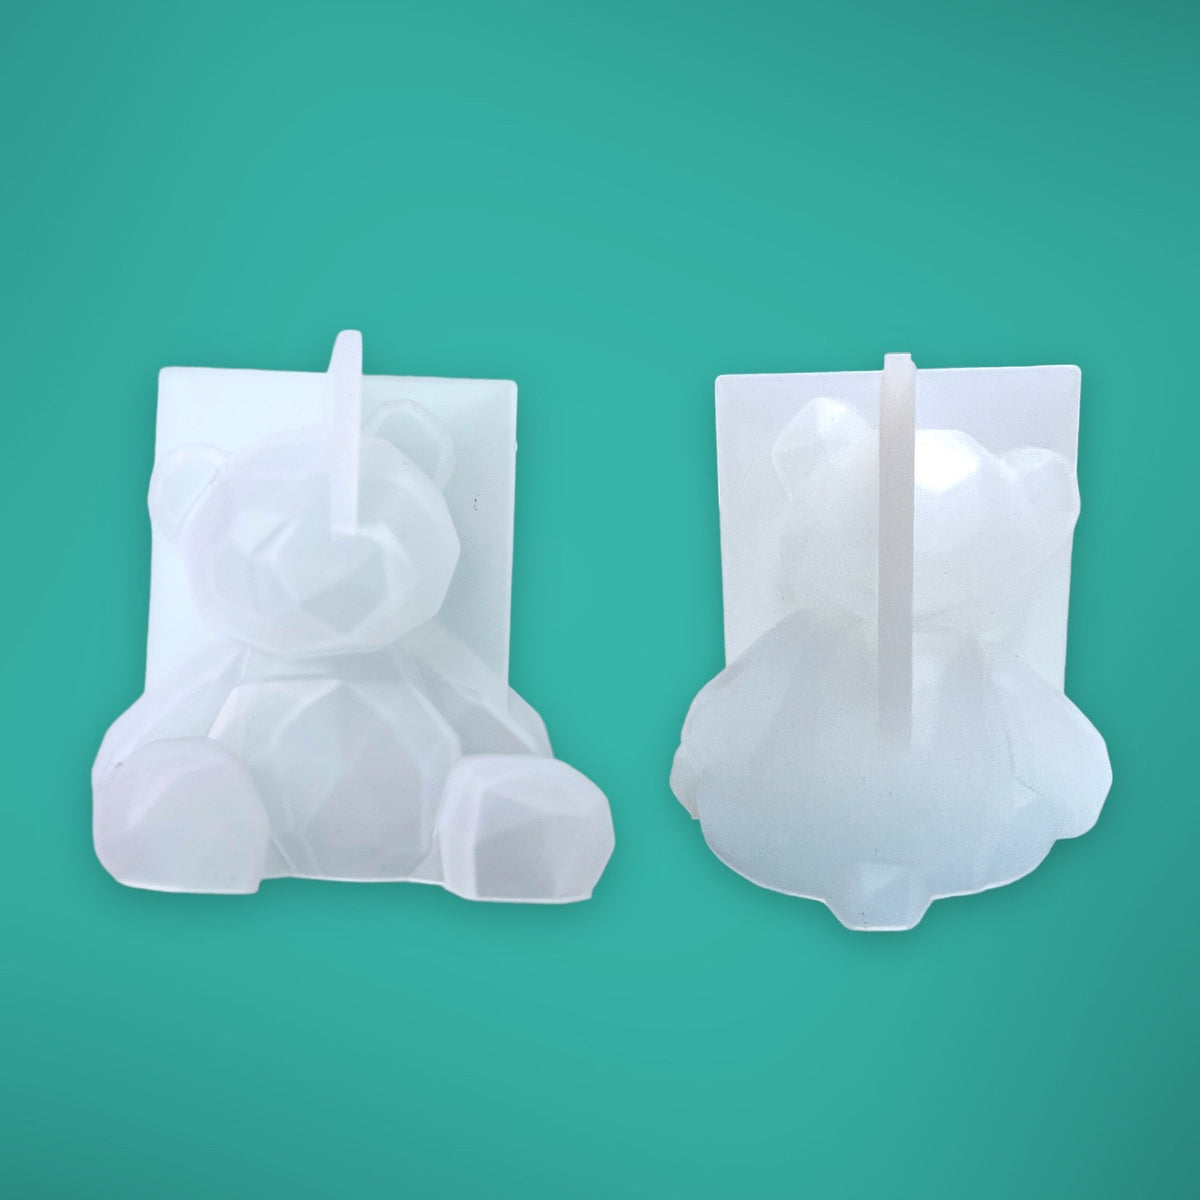 3D Geometric Teddy Bear Mold for UV and Epoxy Resin